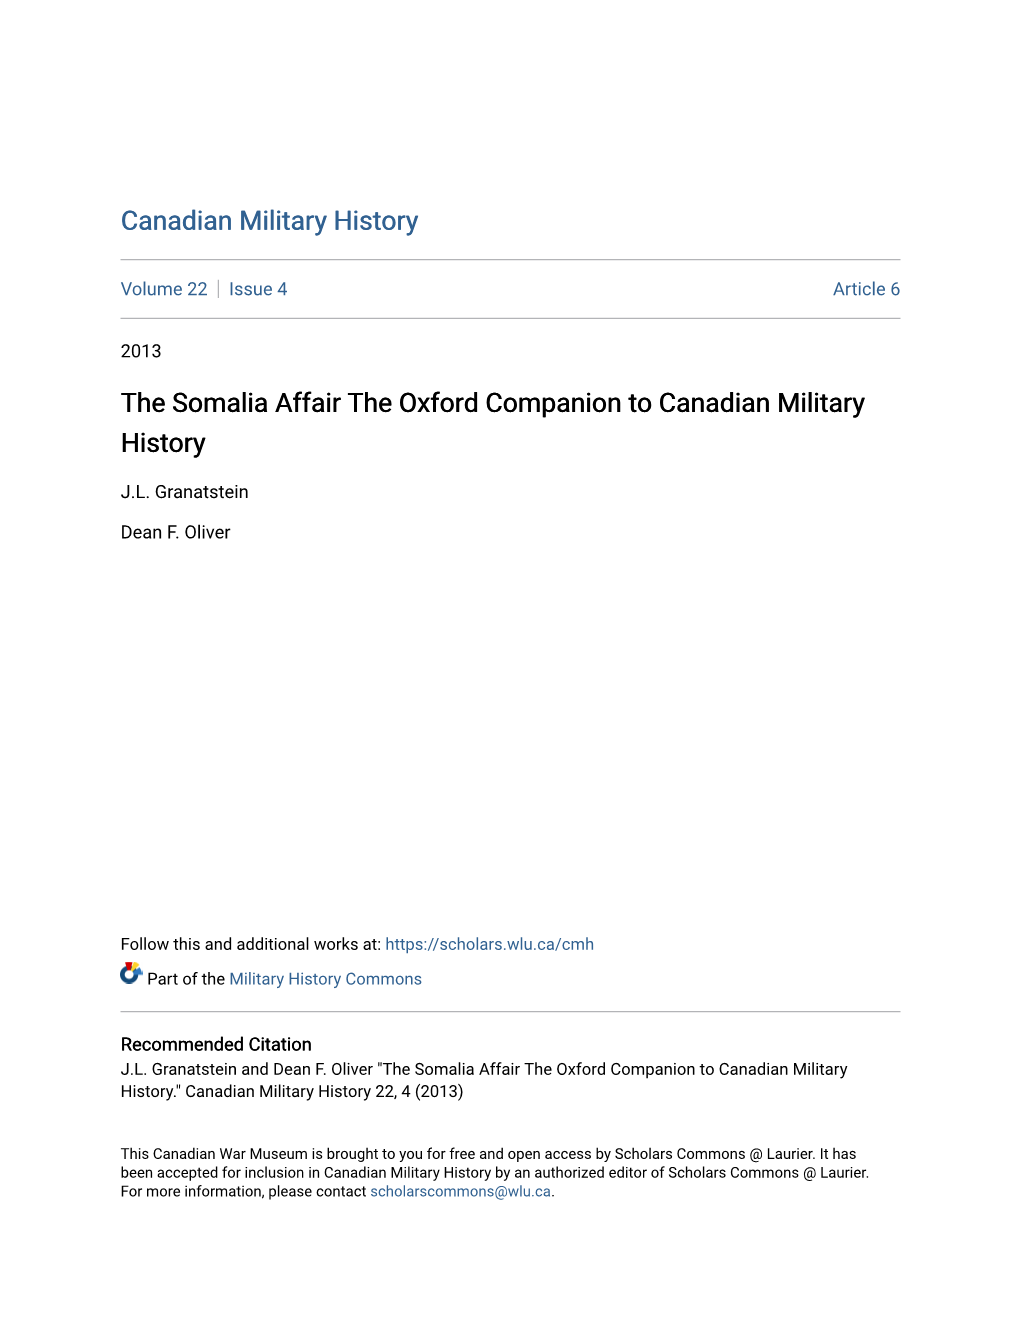 The Somalia Affair the Oxford Companion to Canadian Military History